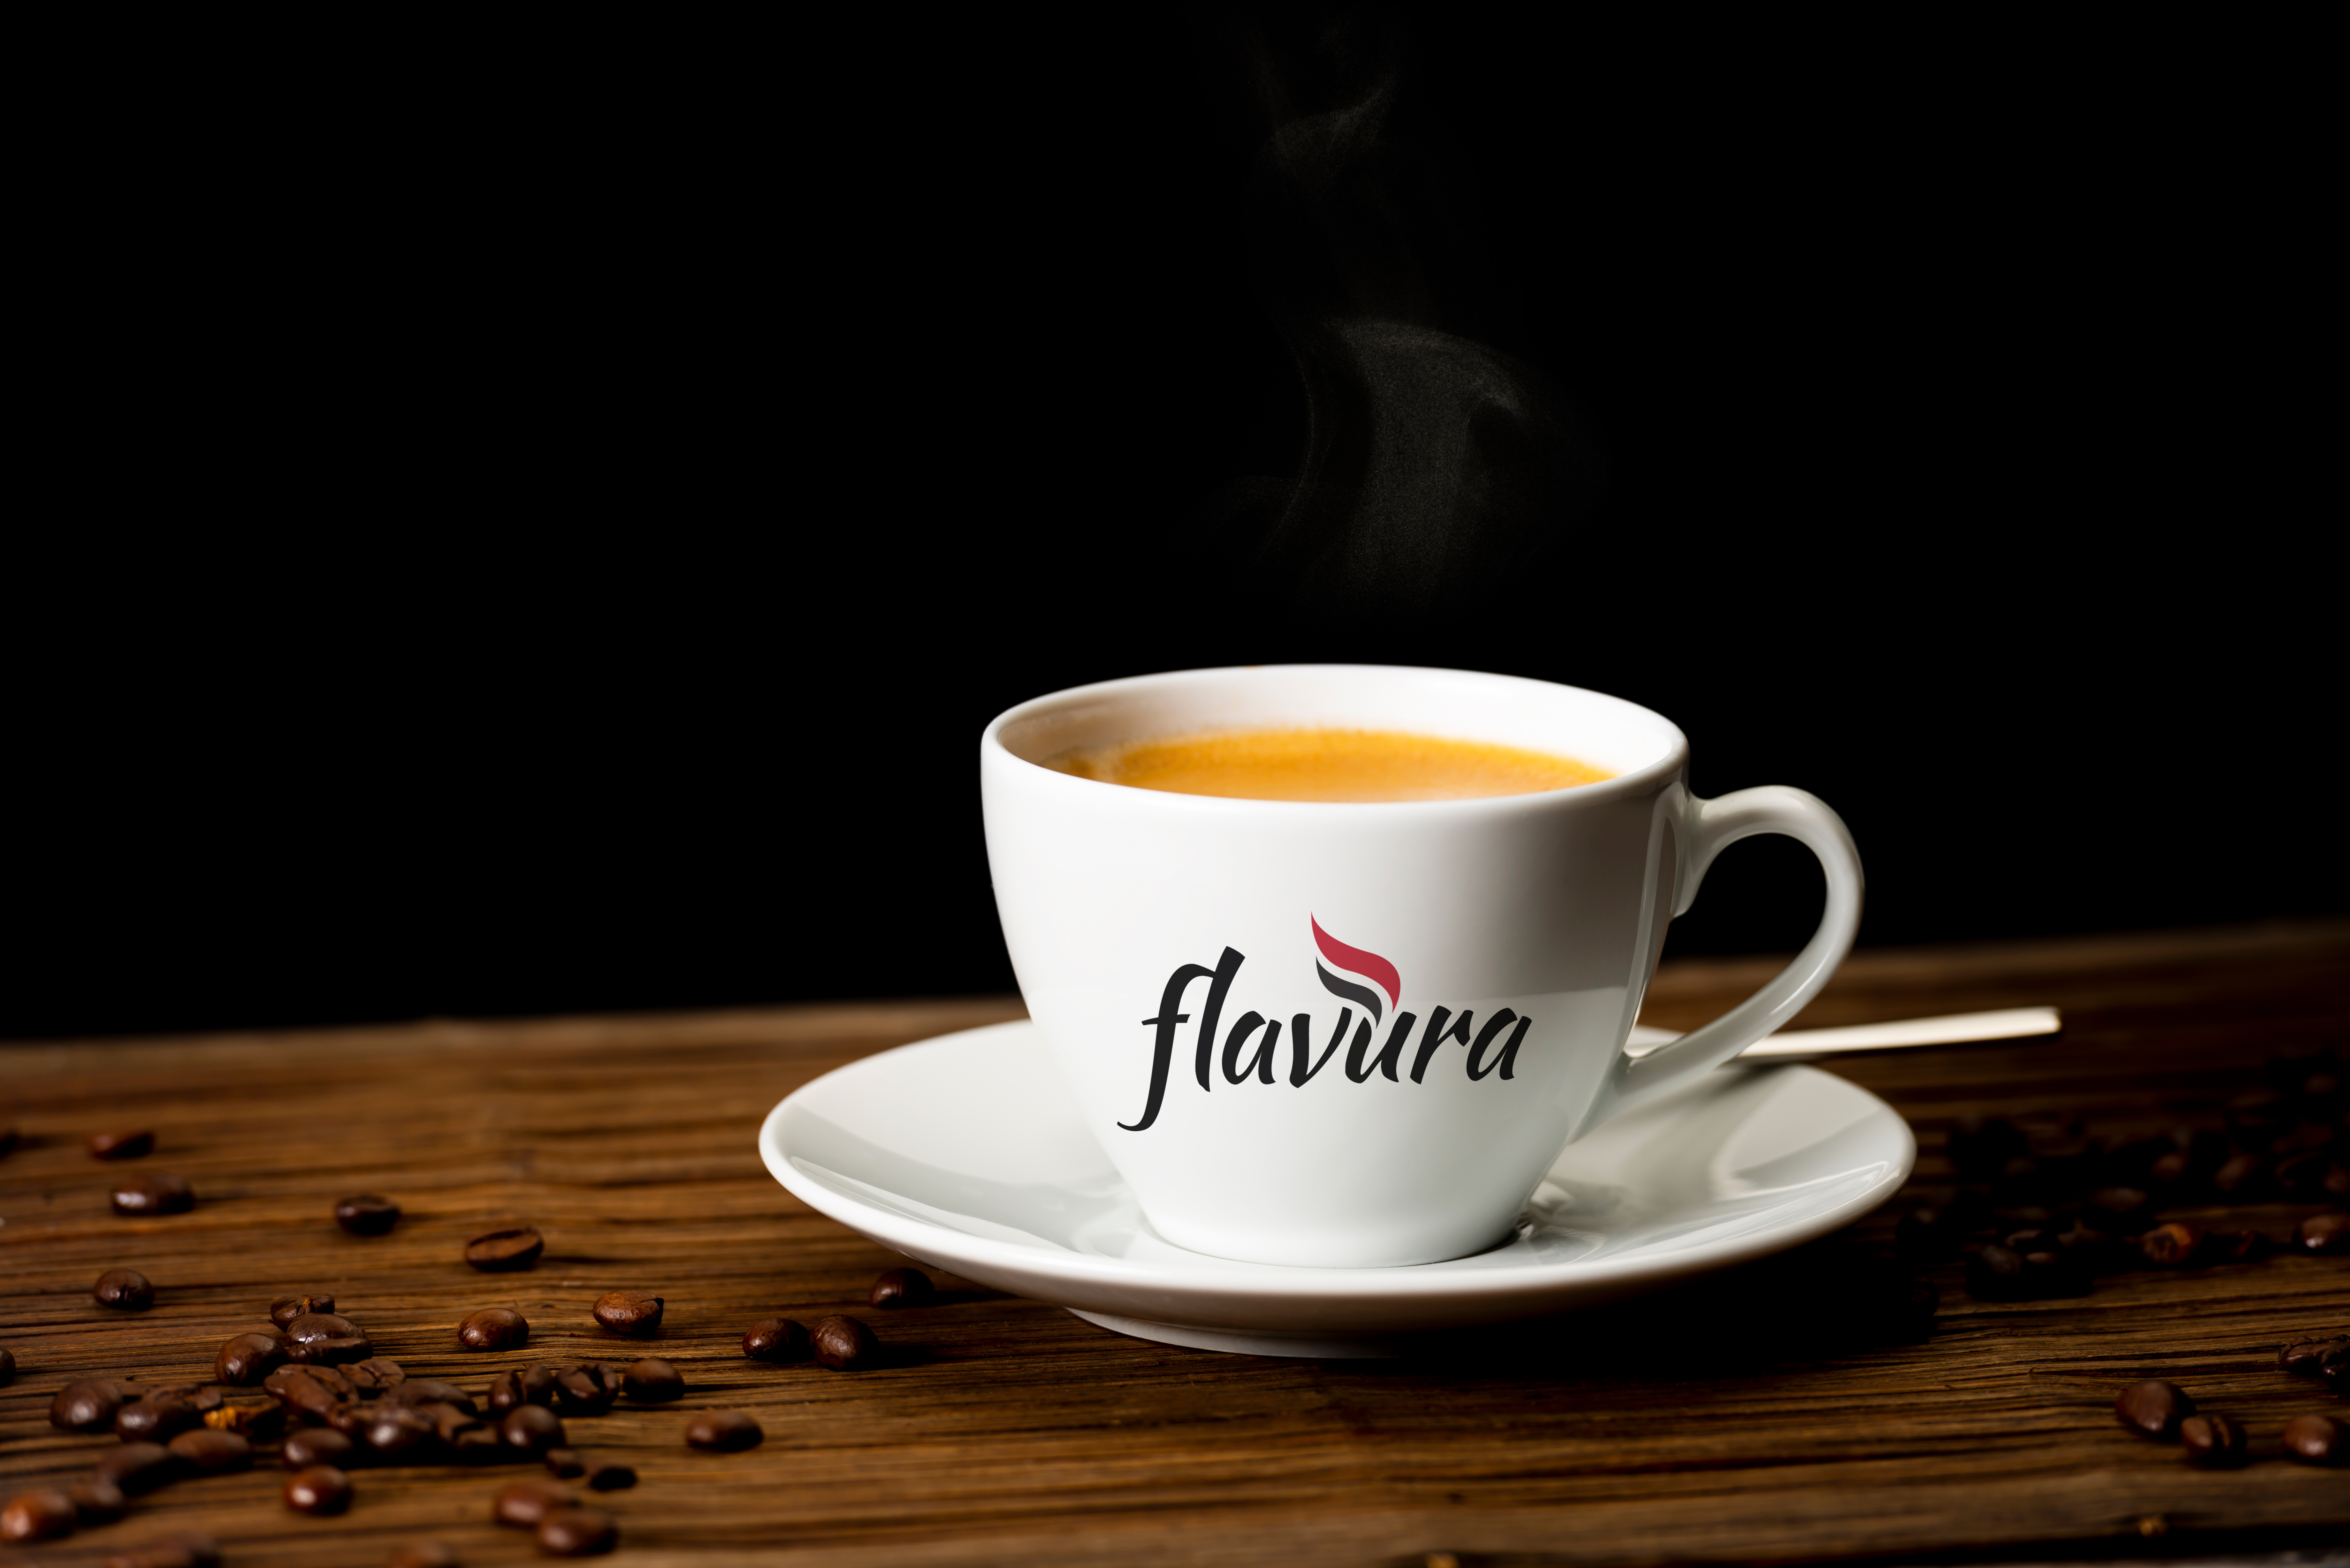 Flavura-Kaffee-Kaffeetasse-mit-Flavura-Logo-6001NPuKwZI1R0V1